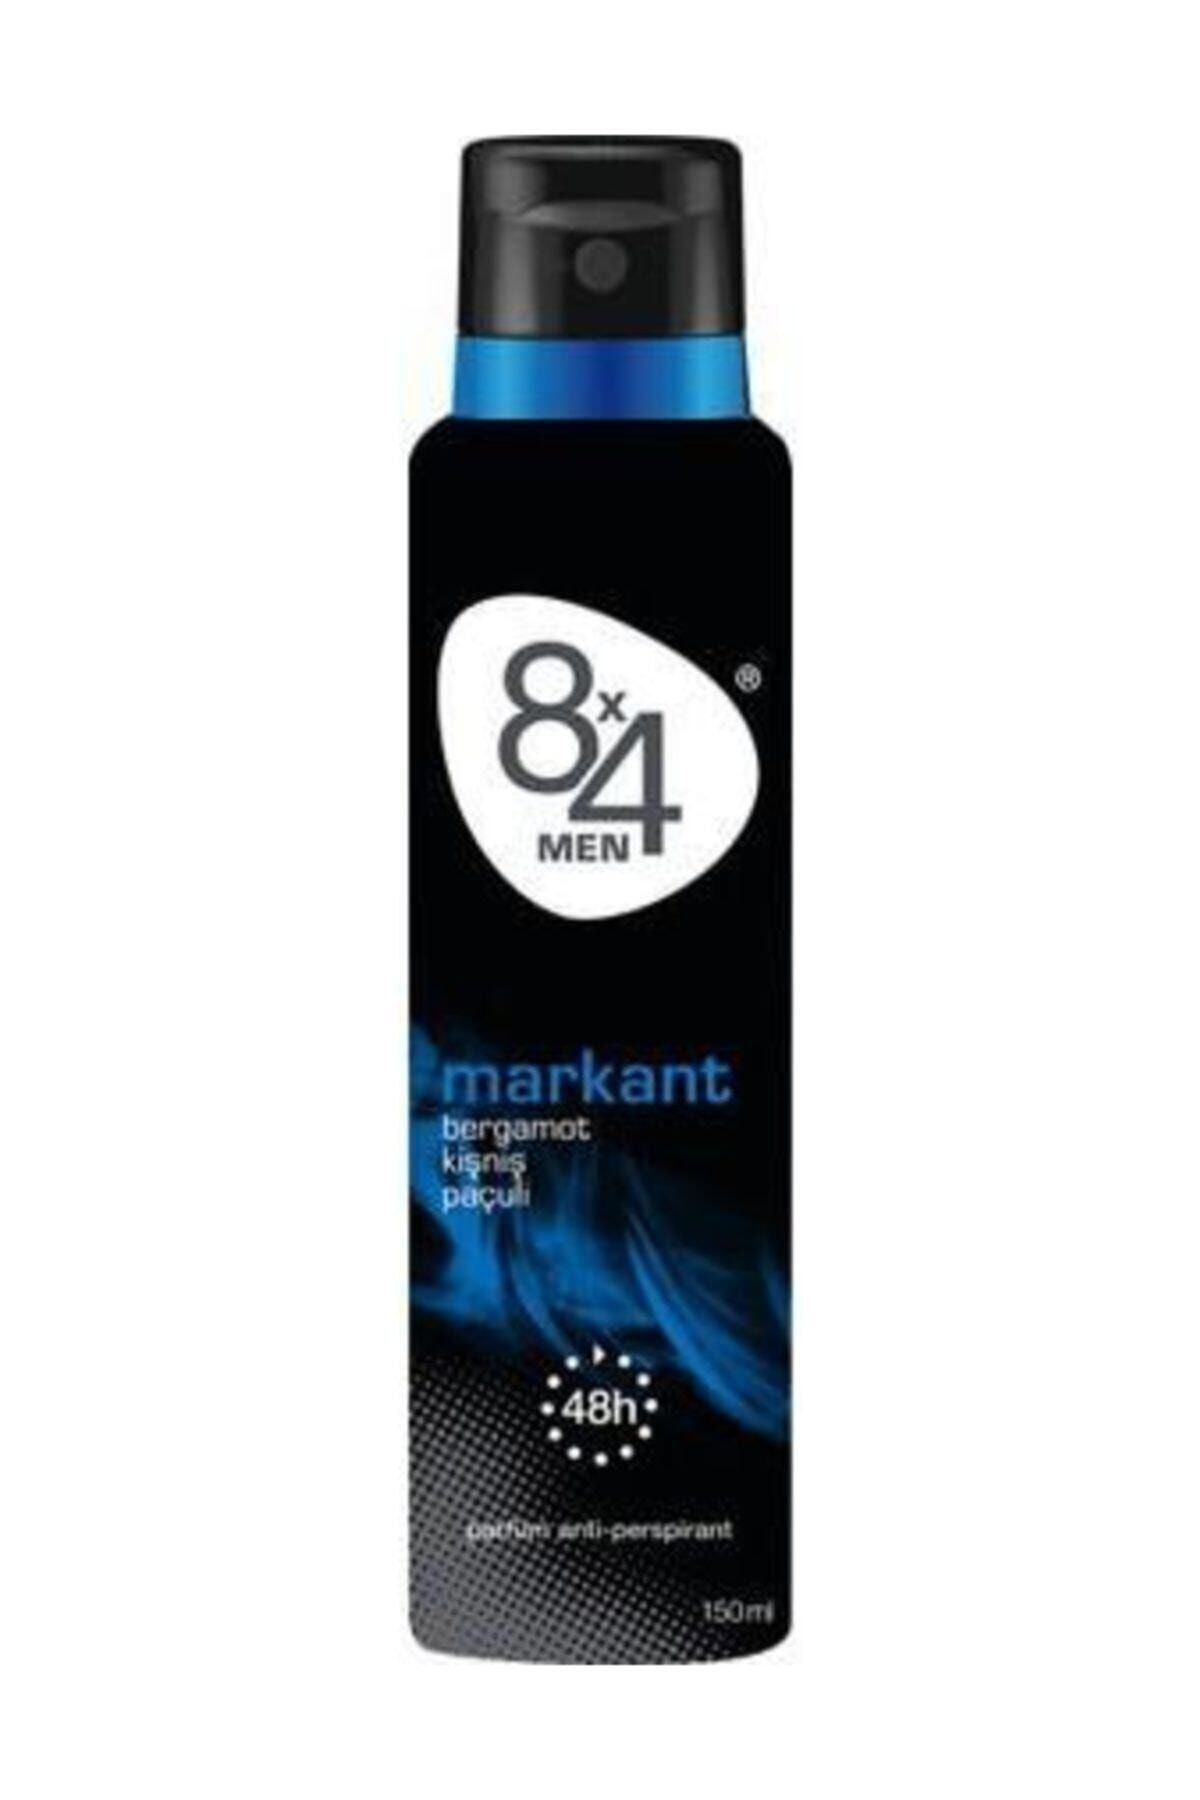 8x4 Erkek Deodorant Markant 150 Ml